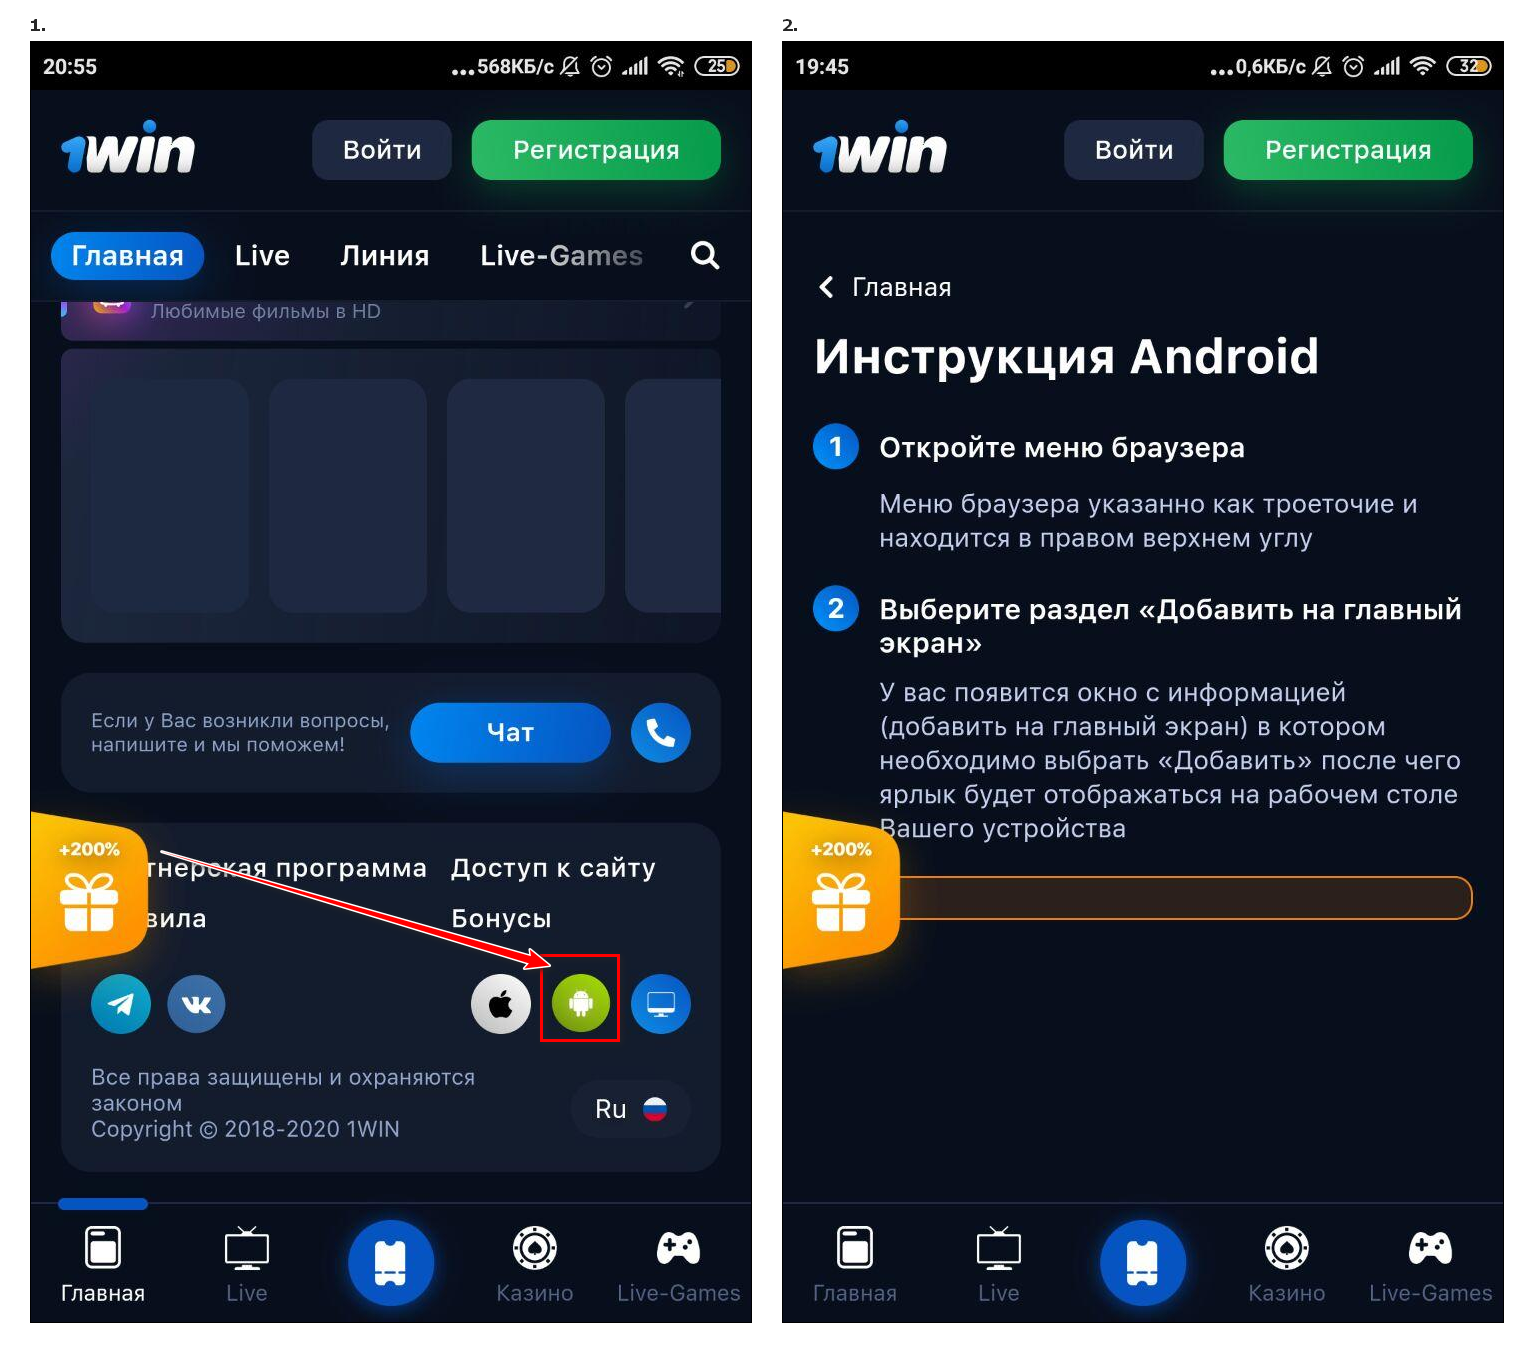 1 вин мобильная версия 1win esw21. 1вин приложение. Андроид 1.